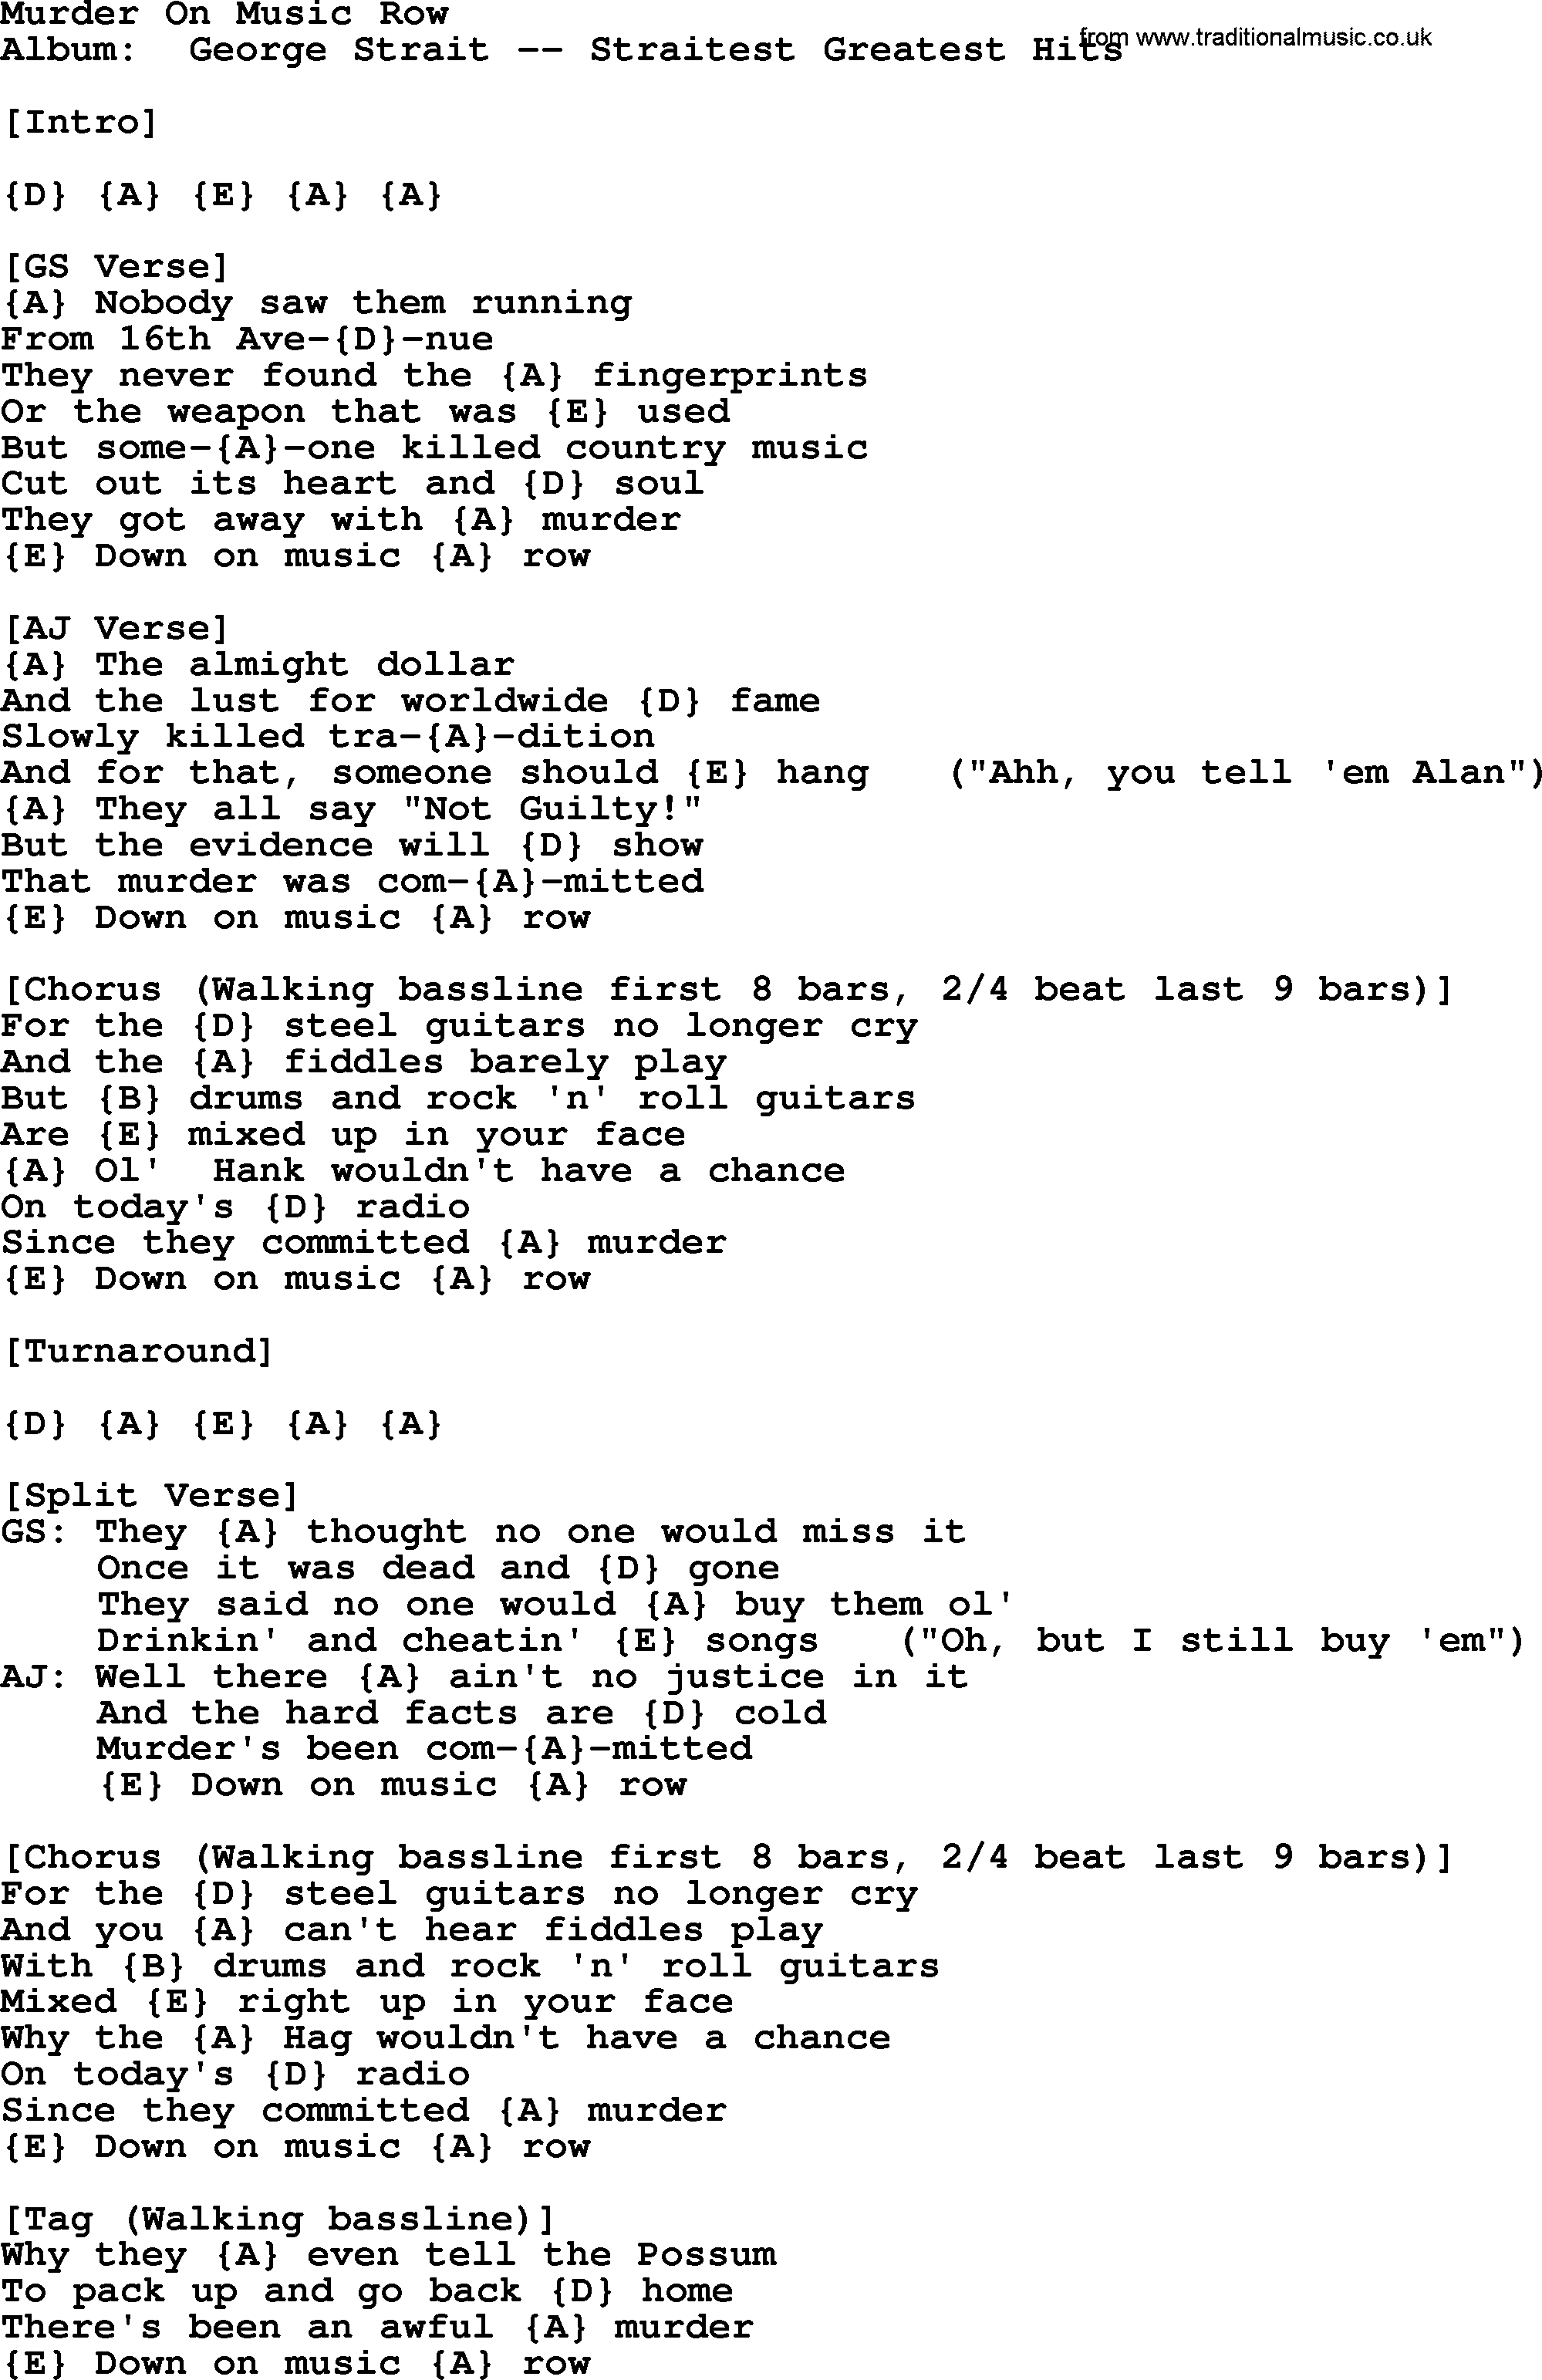 George Strait song: Murder On Music Row, lyrics and chords